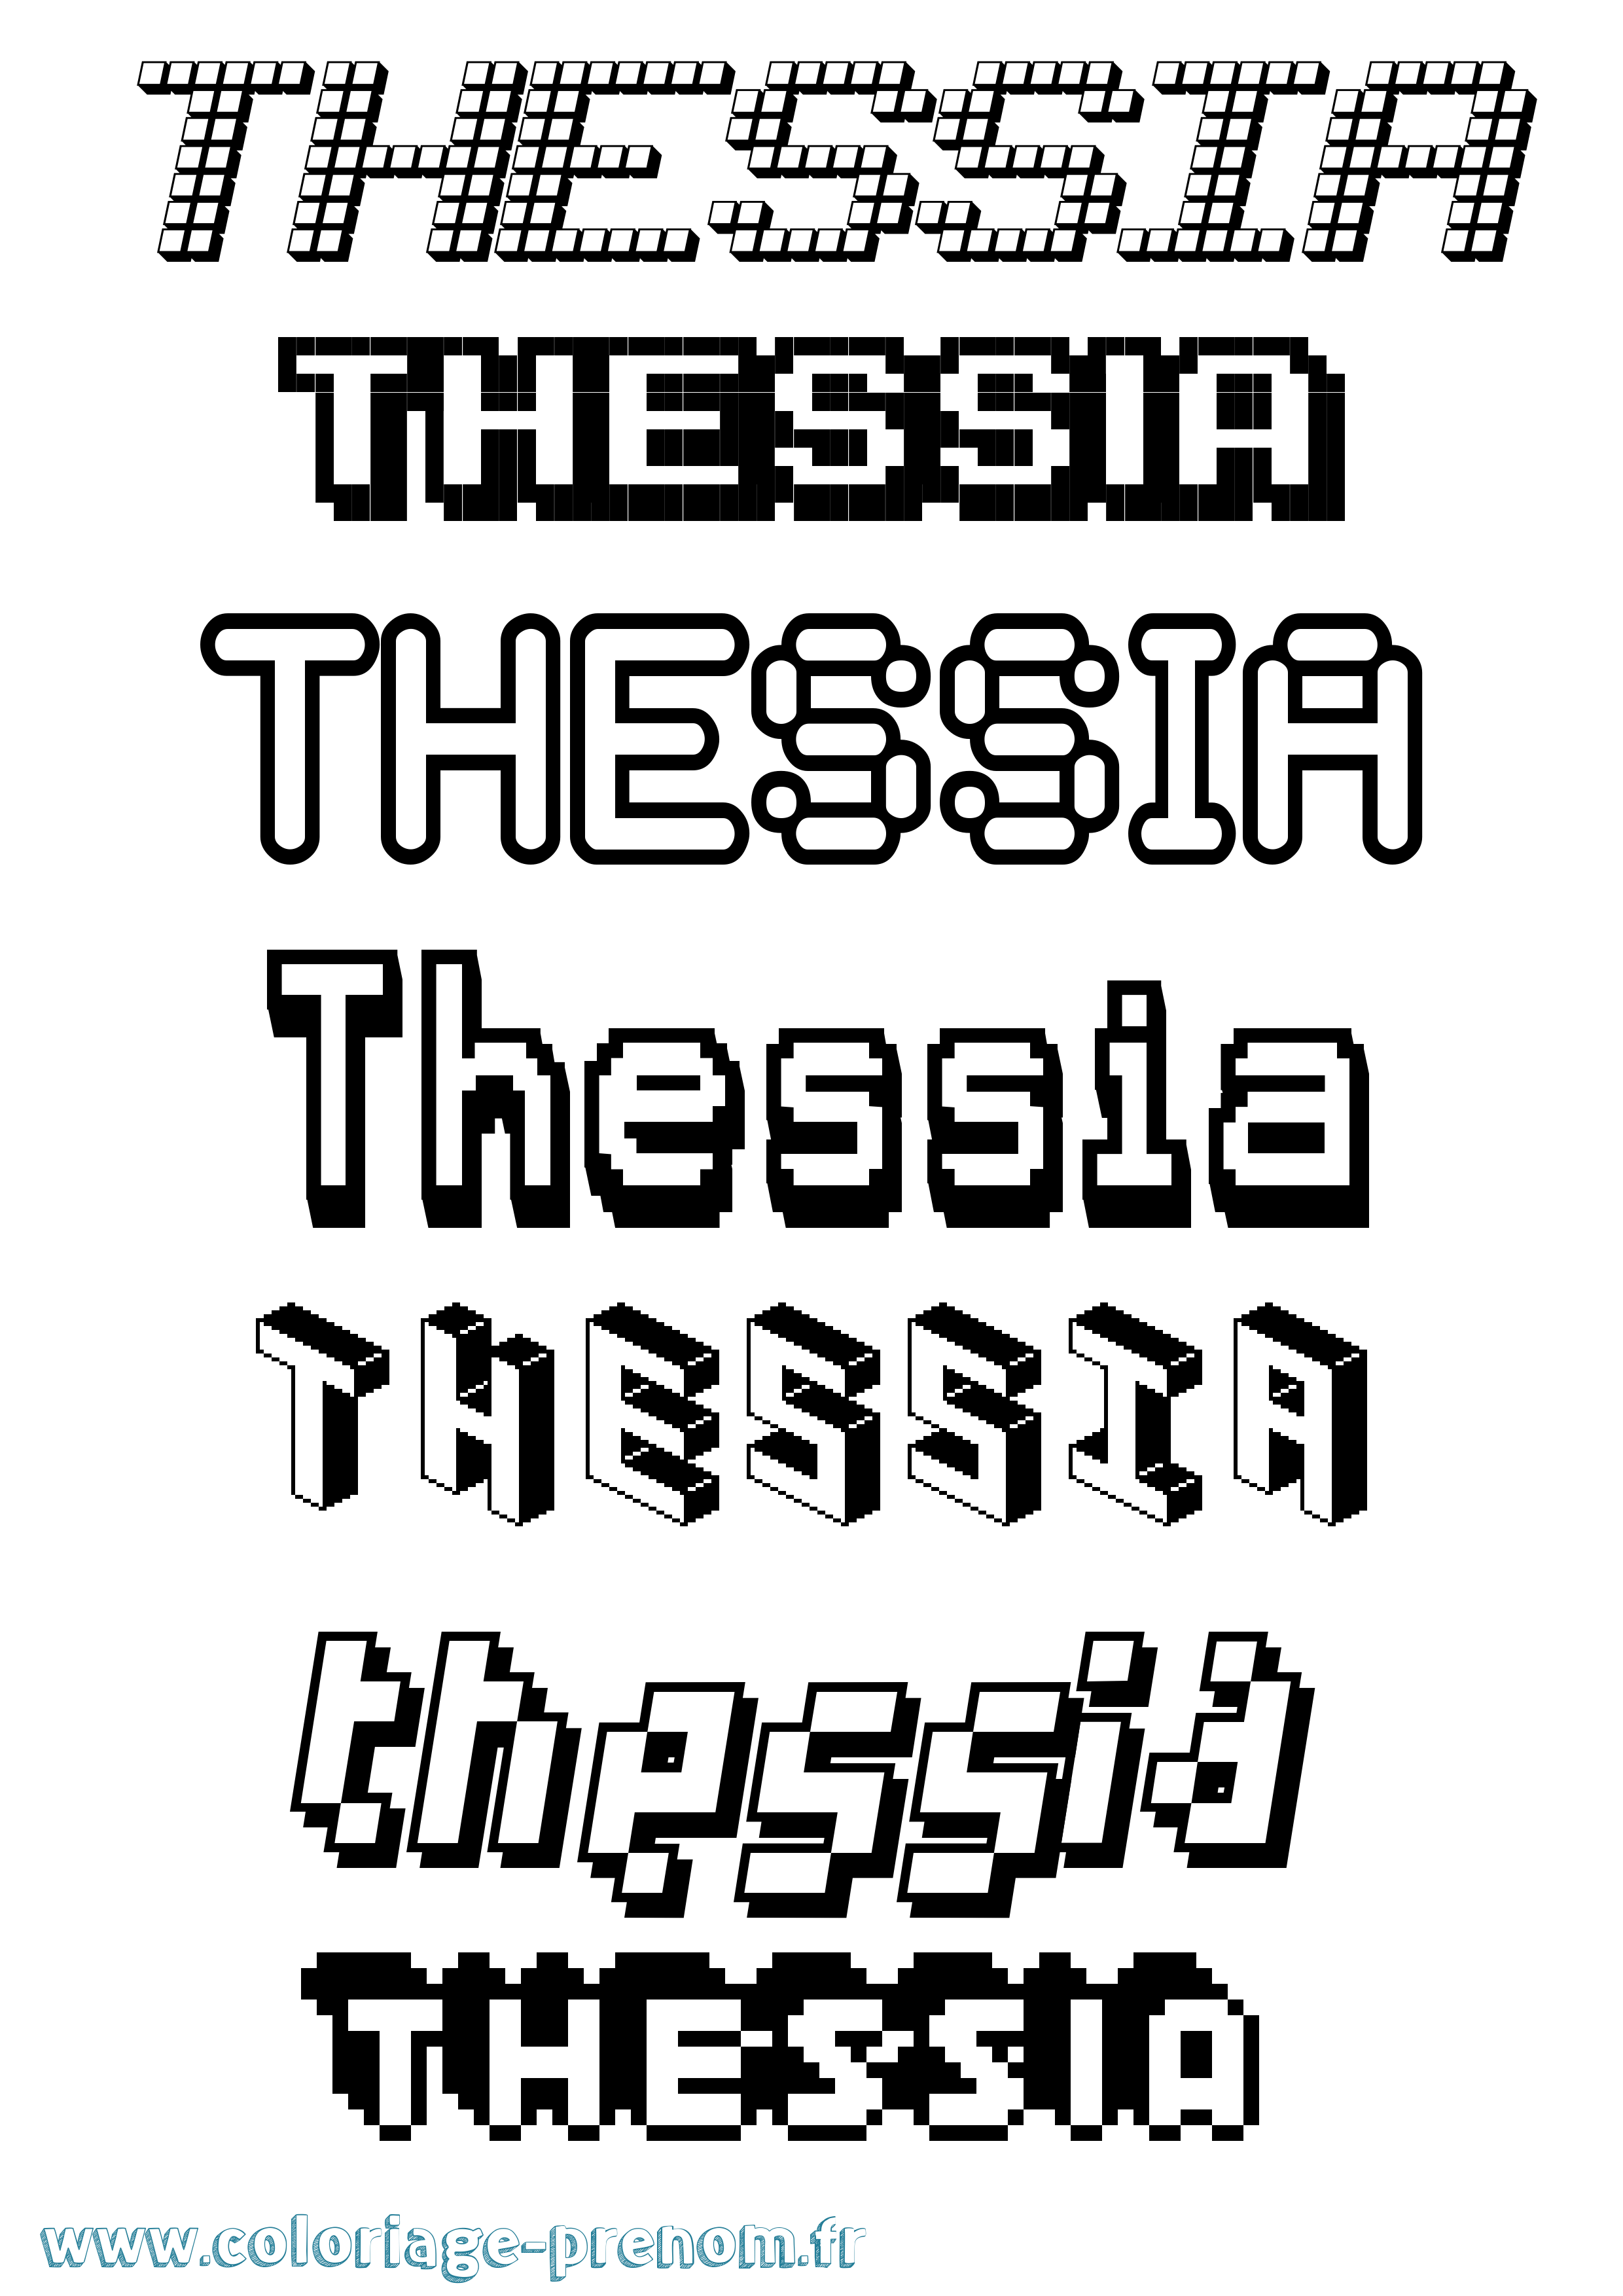 Coloriage prénom Thessia Pixel